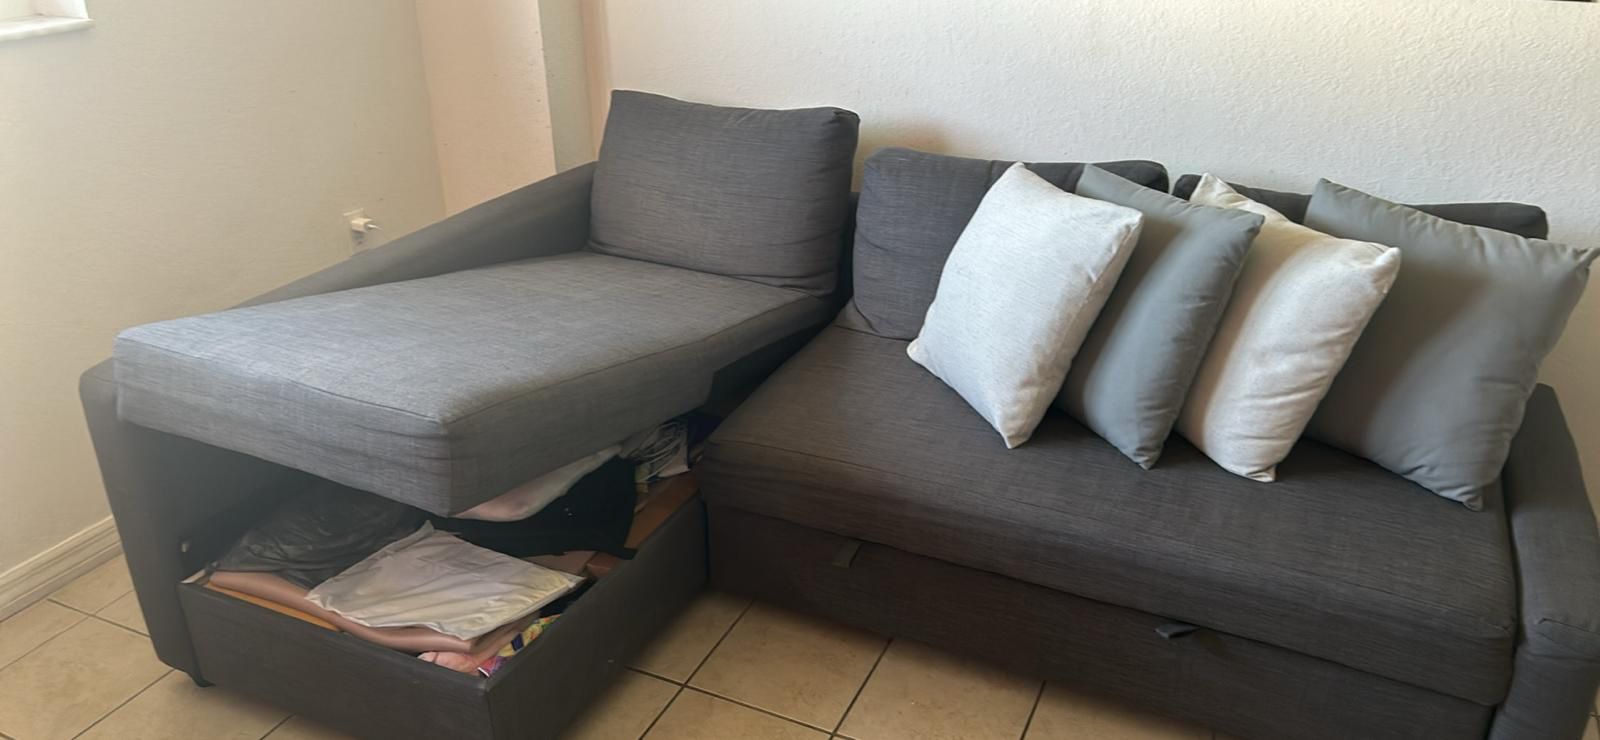 Sectional Sofa (FRIHETEN Sleeper sectional,3 seat w/storage, Hyllie dark gray